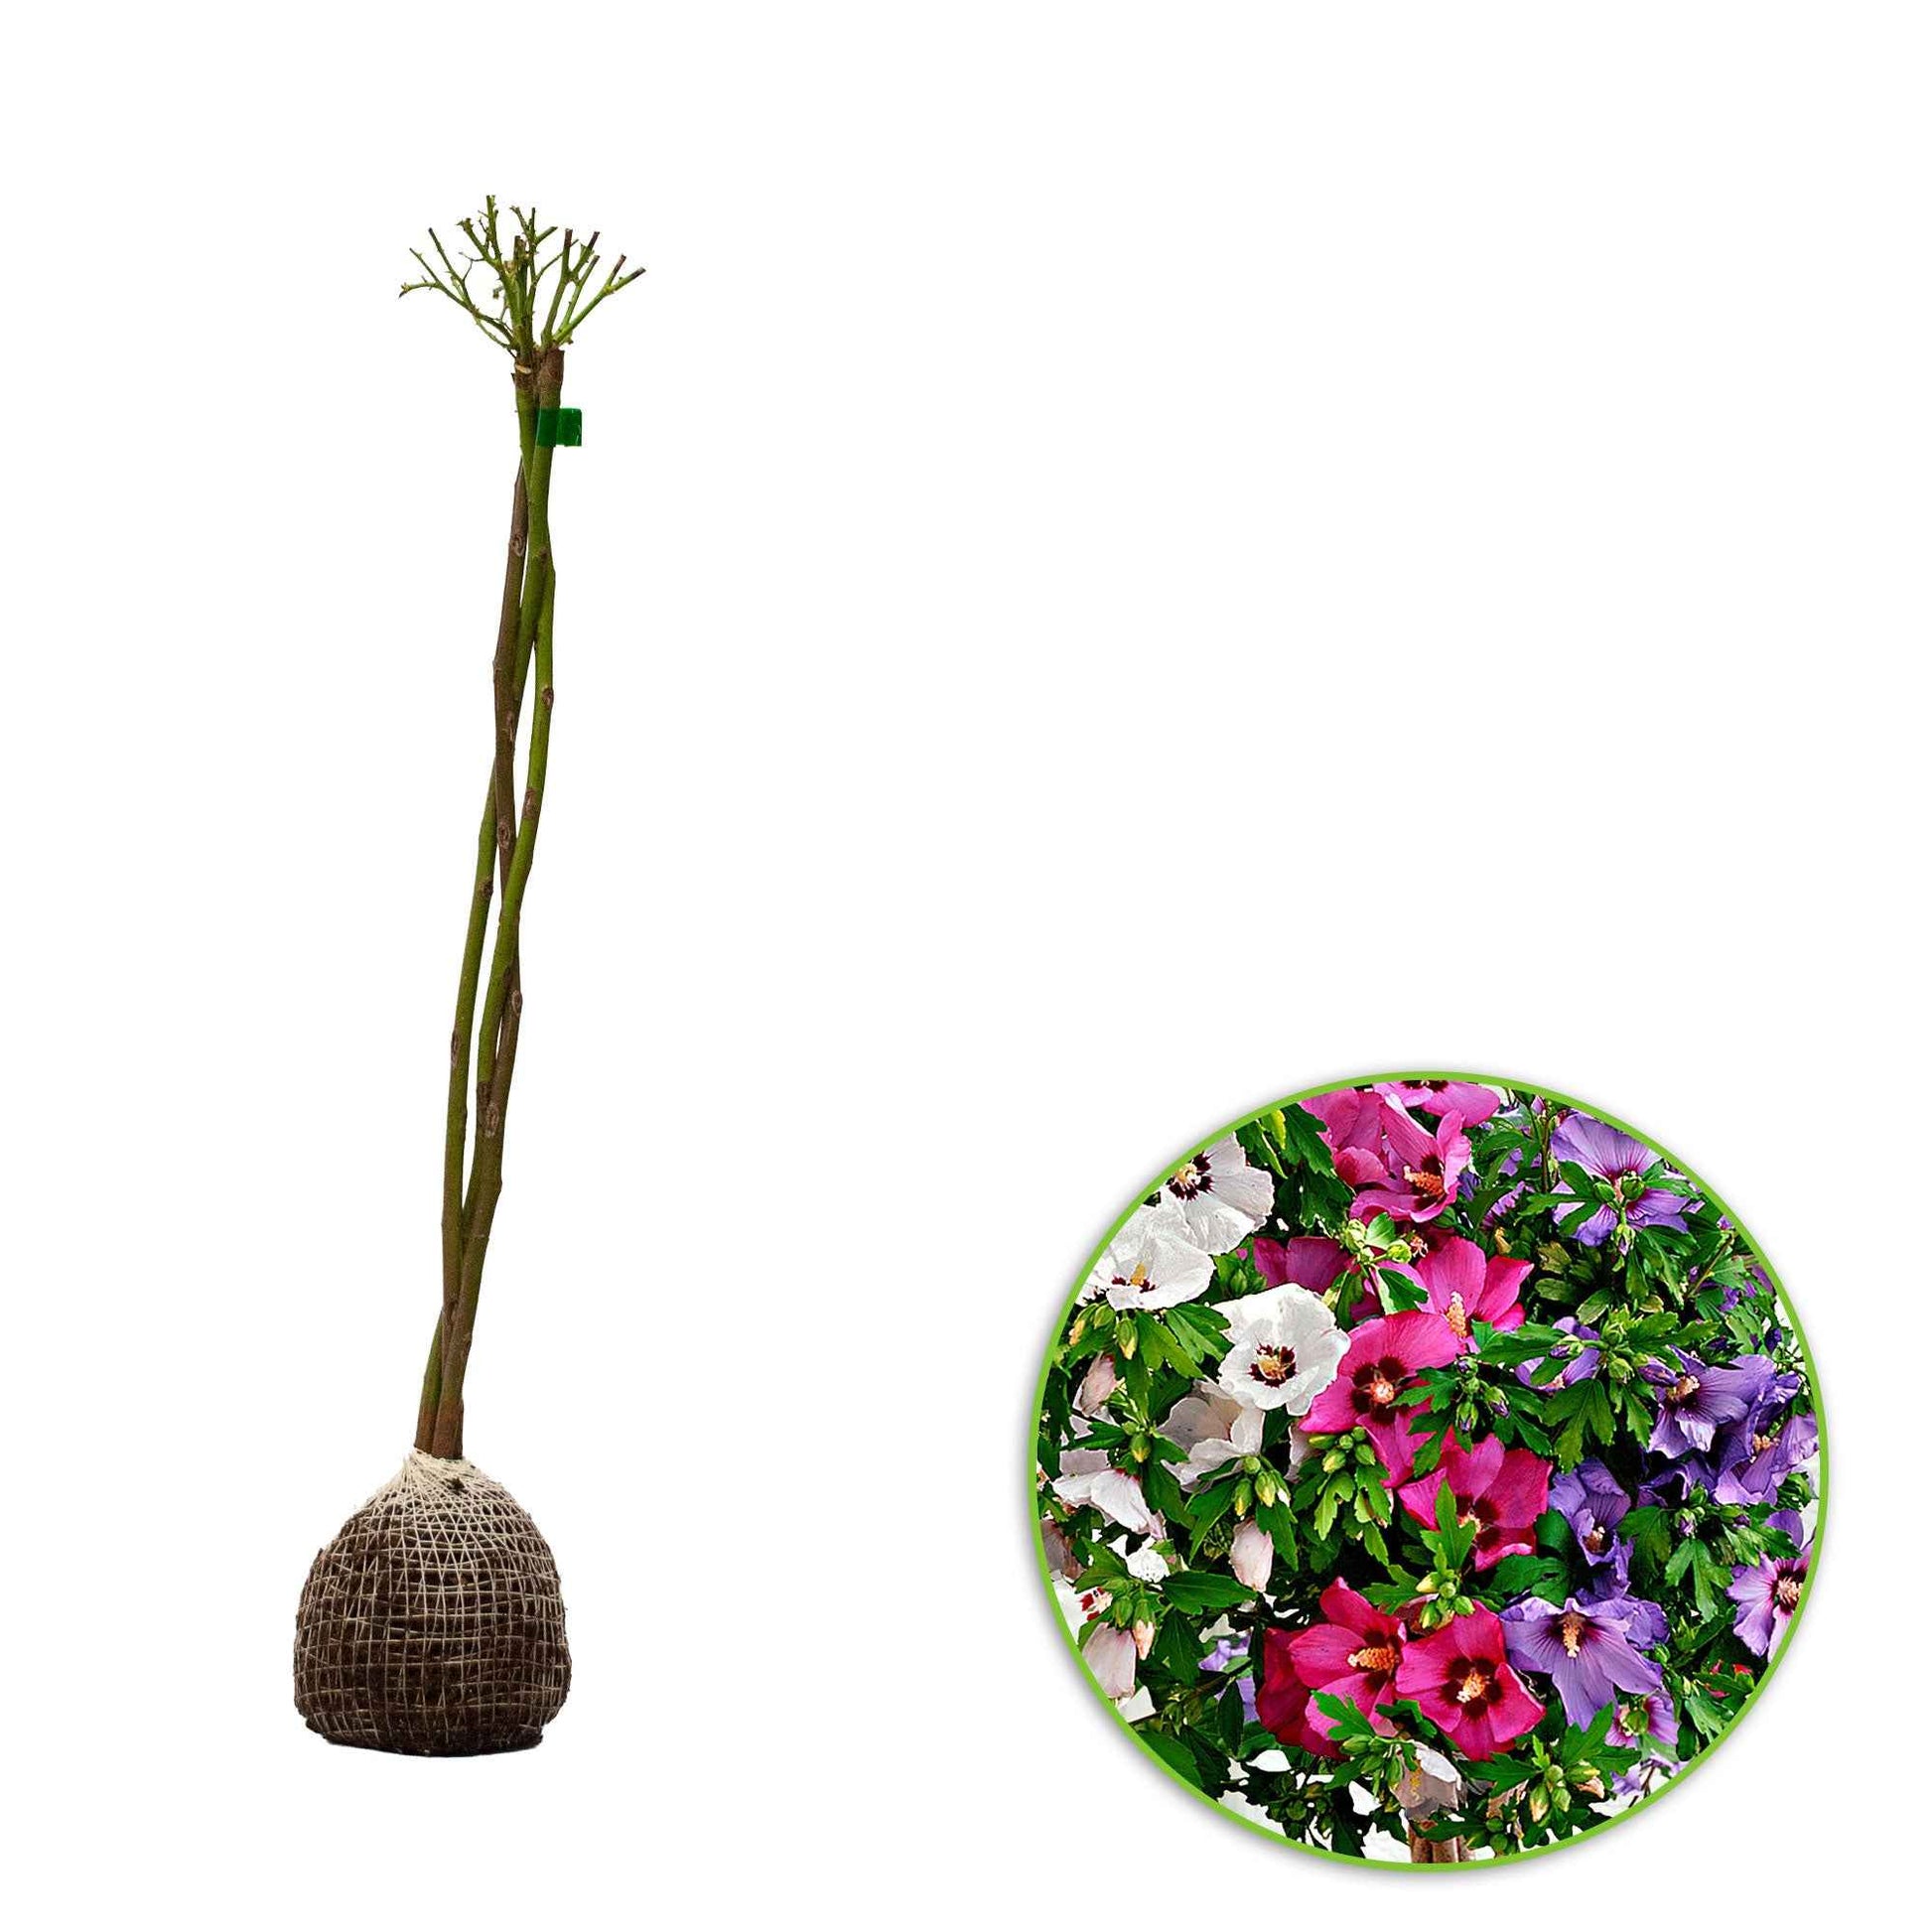 Roseneibisch Hibiscus 'Hardy Hibiscus' + 'Rose of Sharon' + 'Rose Mallow' weiβ-rosa-lila - Winterhart - Gartenpflanzen